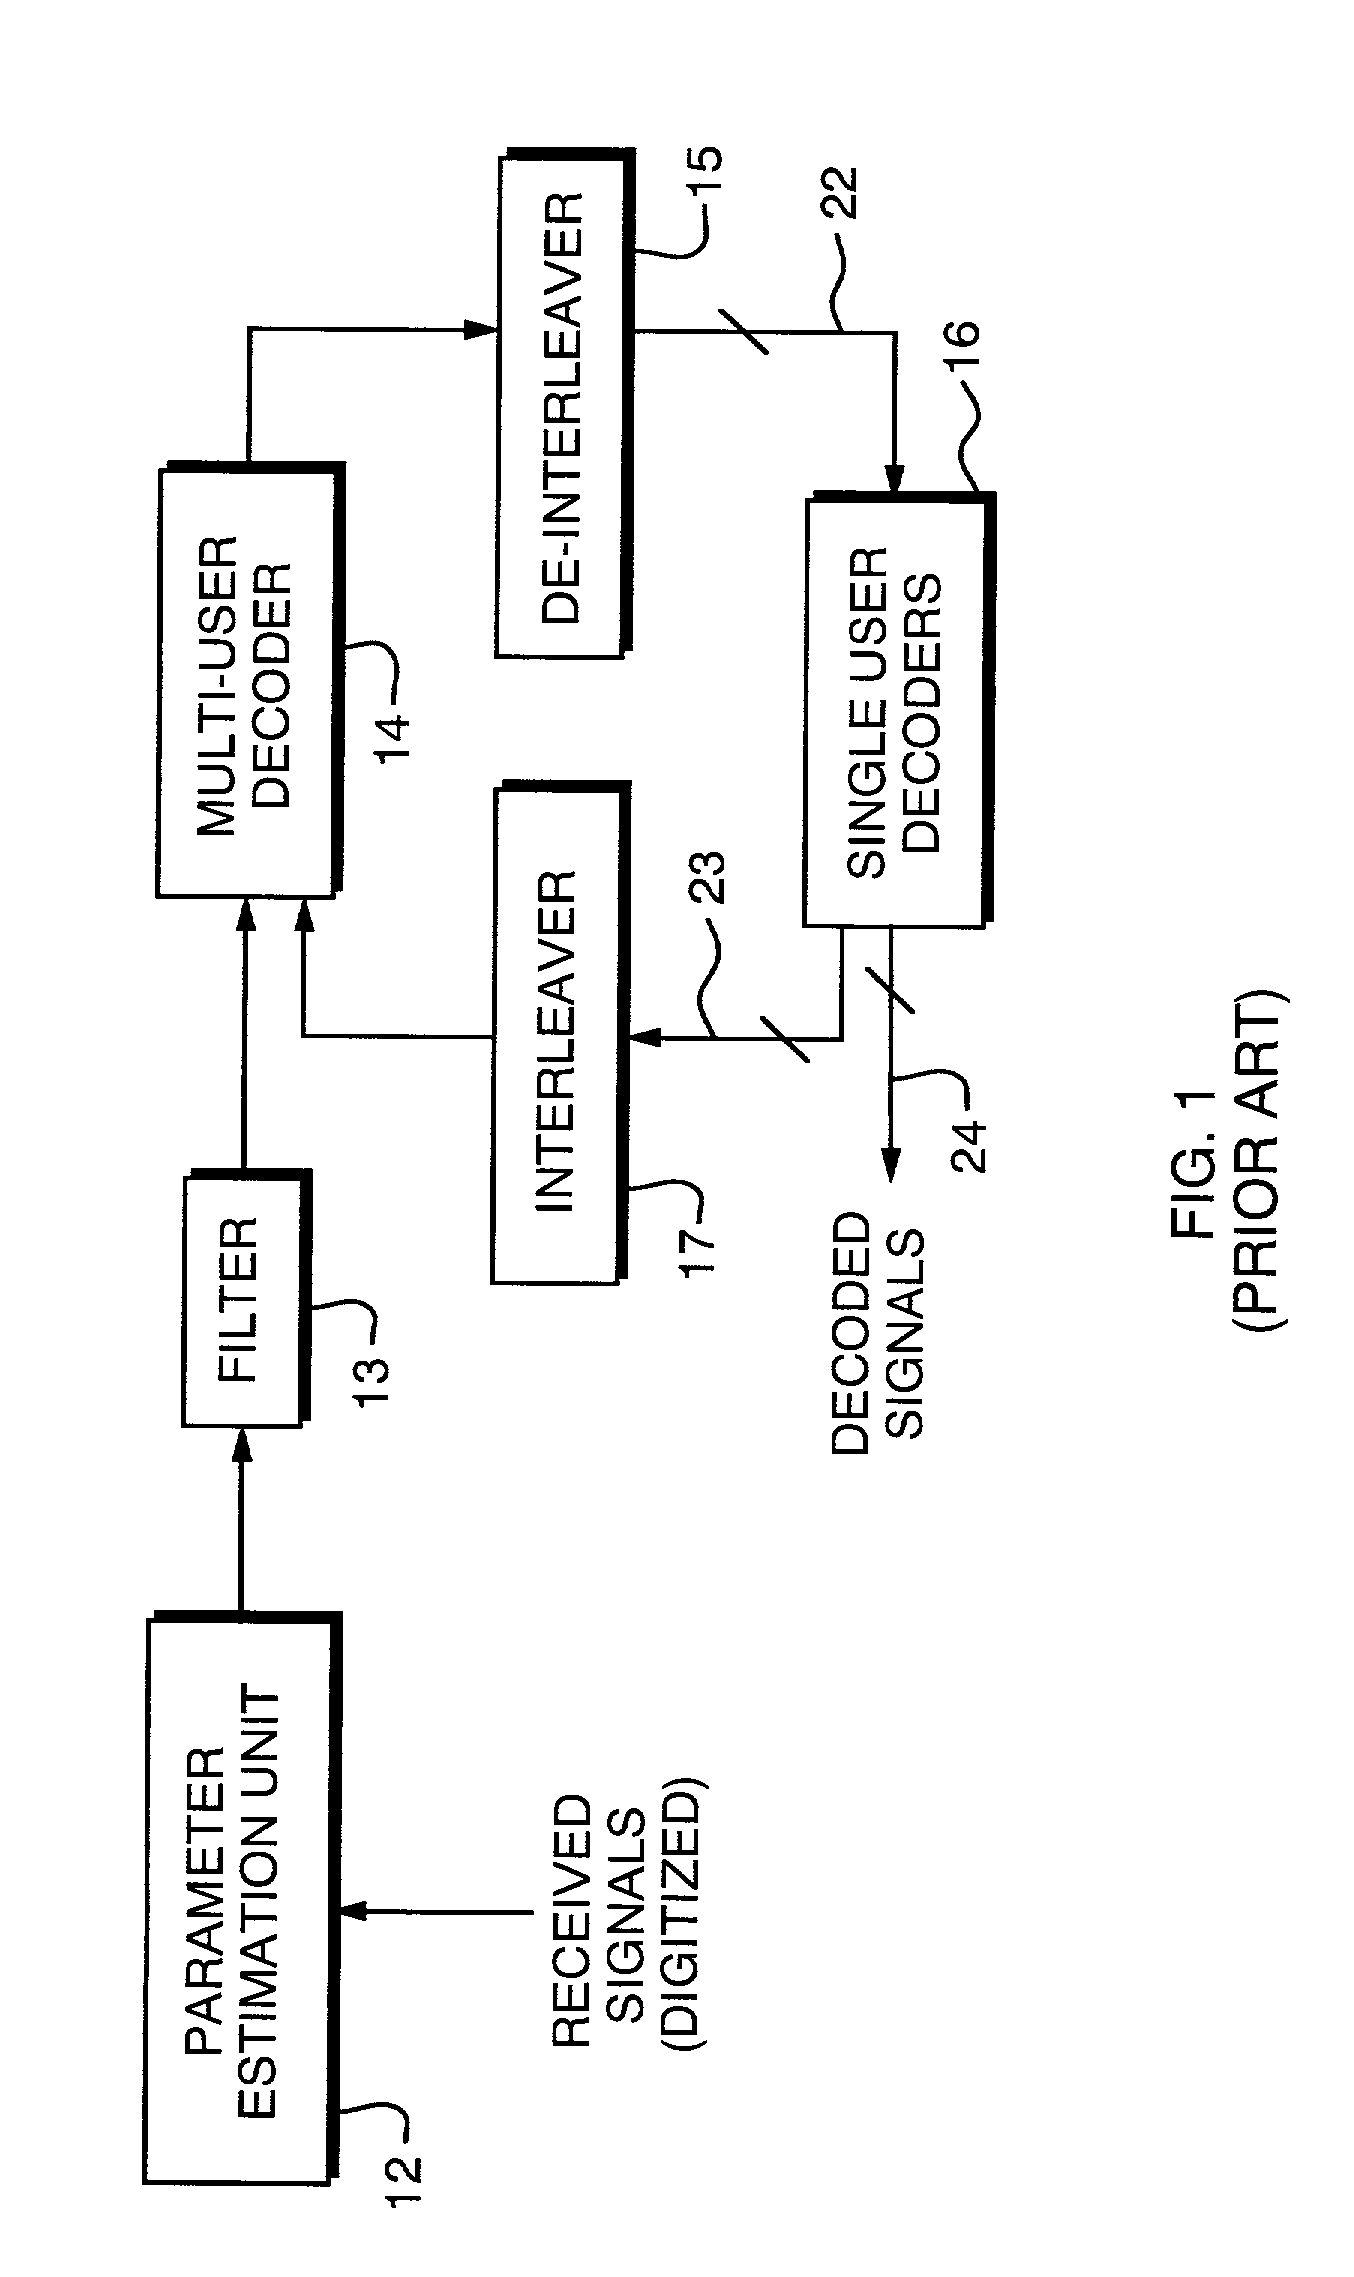 Method and apparatus for random shuffled turbo multiuser detector